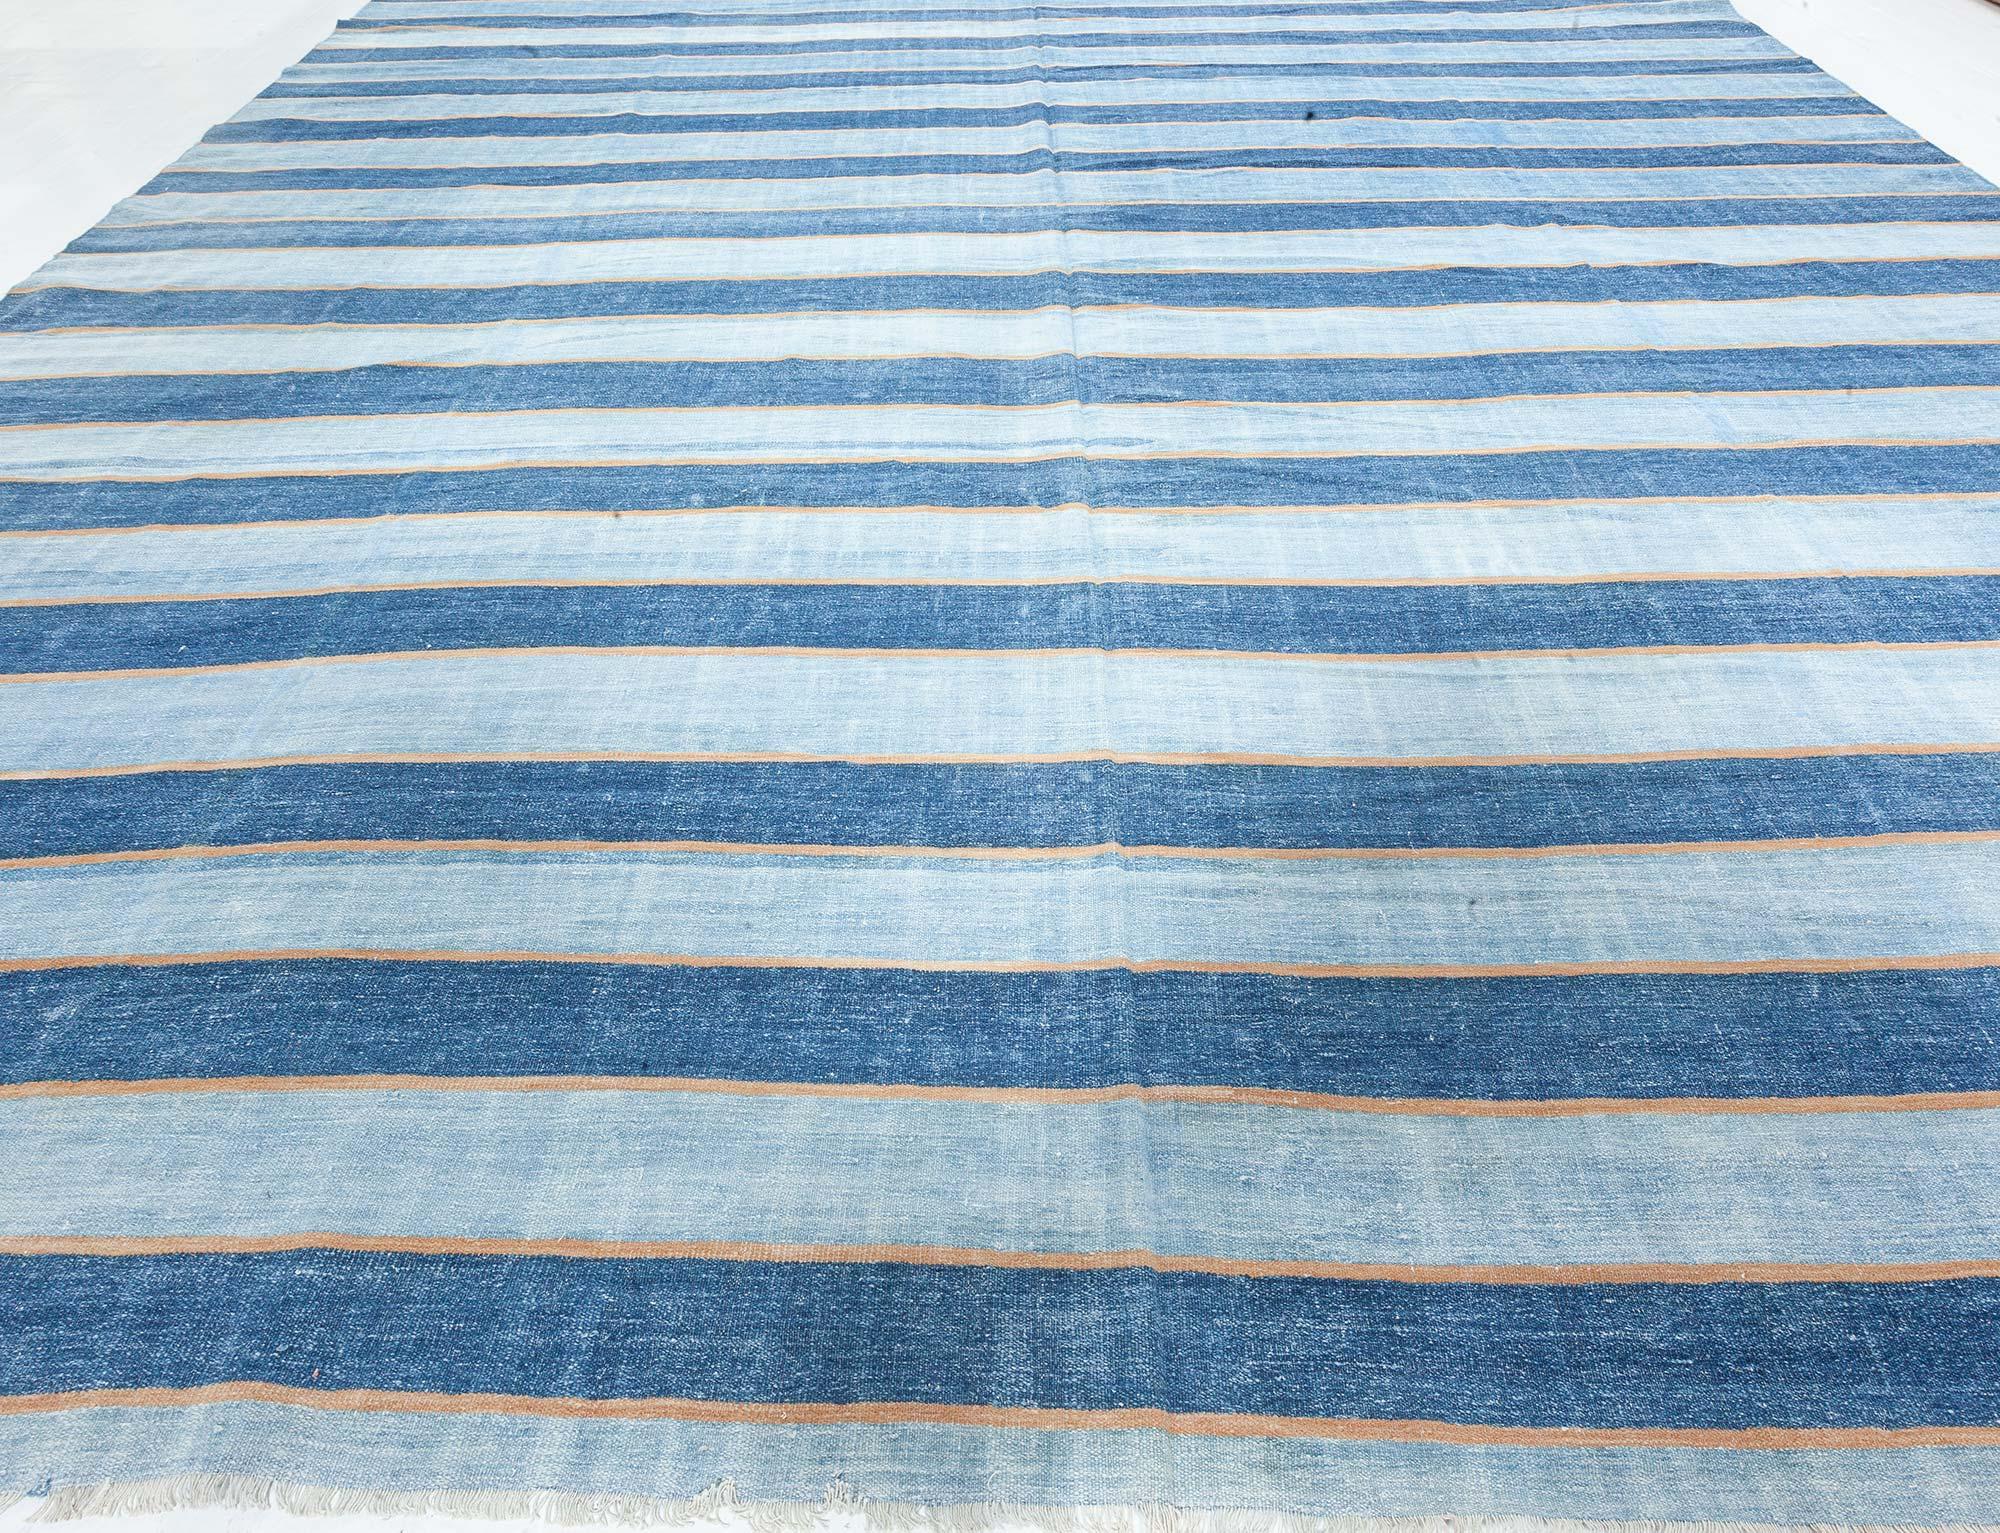 Vintage Indian Dhurrie striped blue rug
Size: 10'4